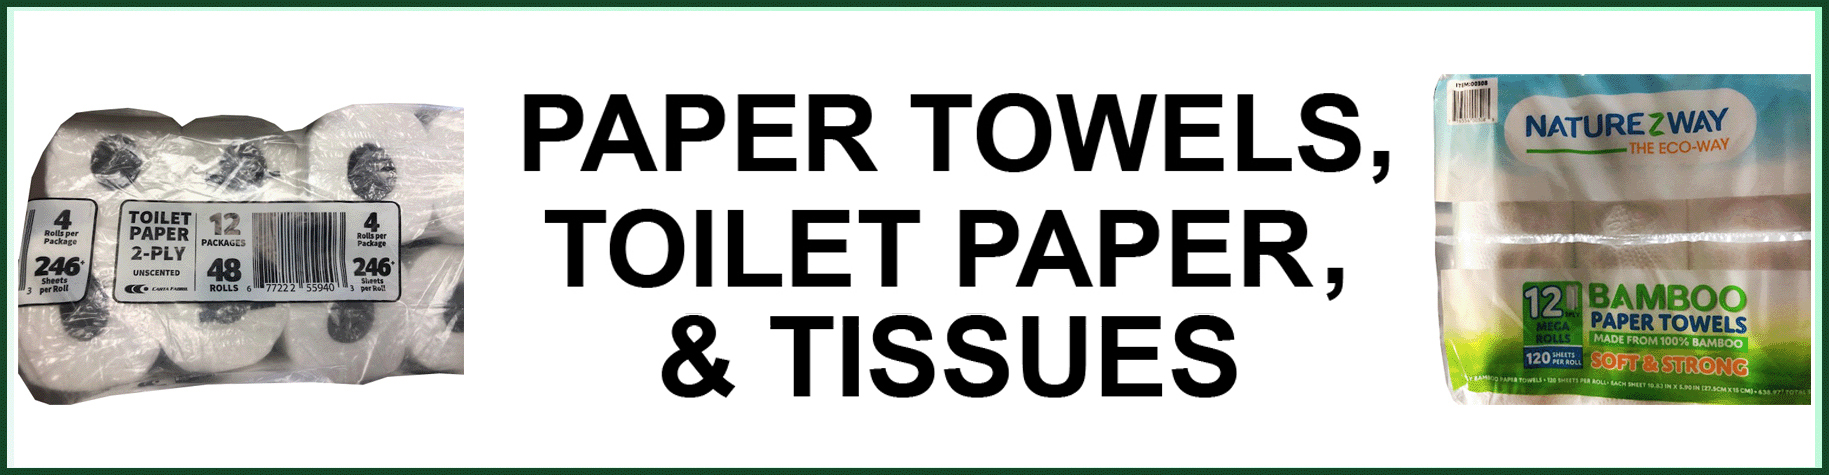 PAPER TOWELS, TOILET PAPER, & TISSUES